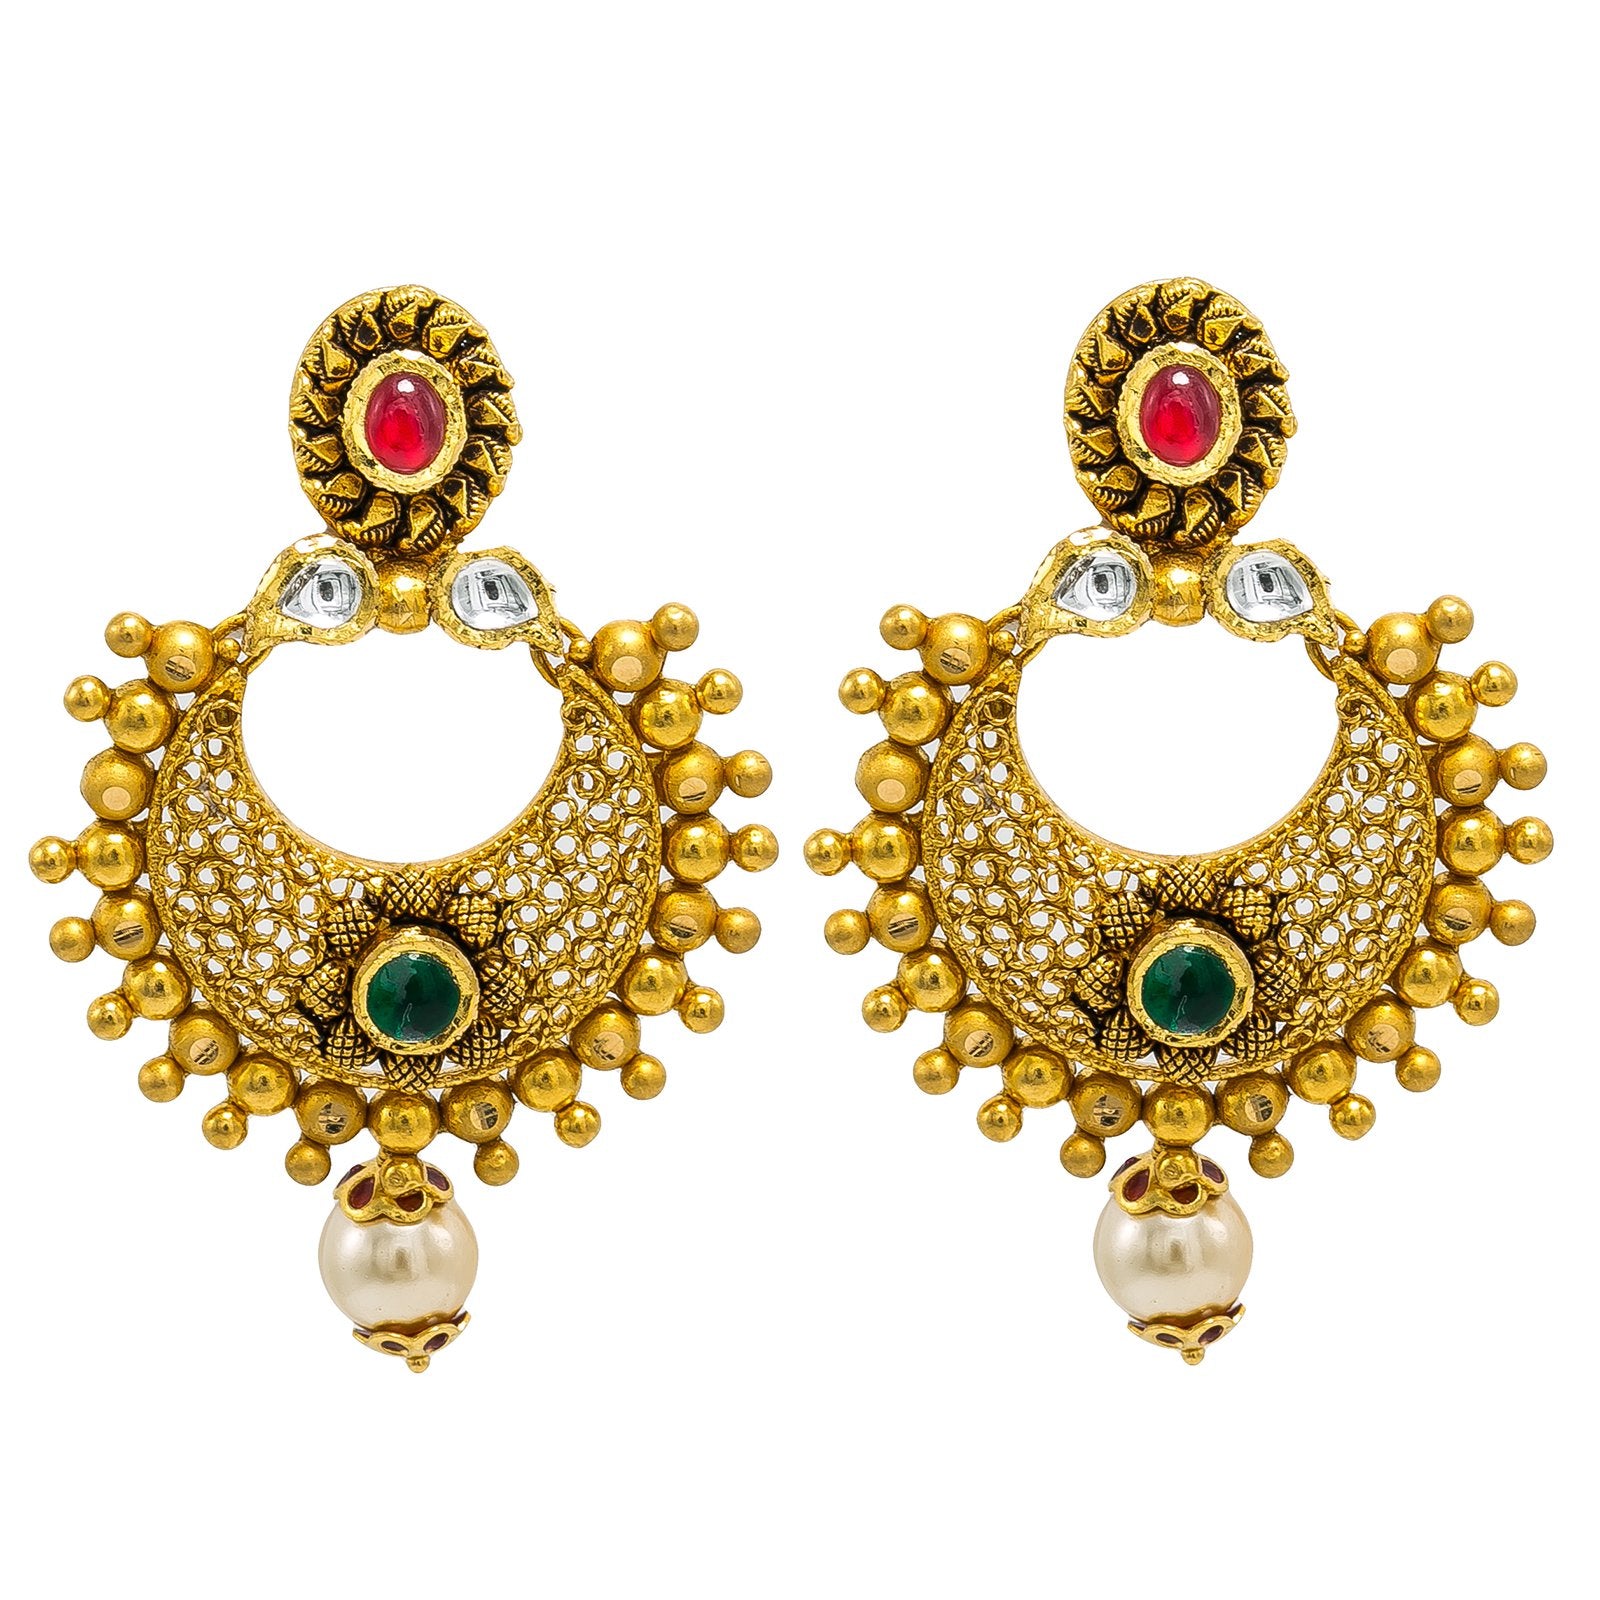 Chandbali earrings with golden beads – Vastrabharana